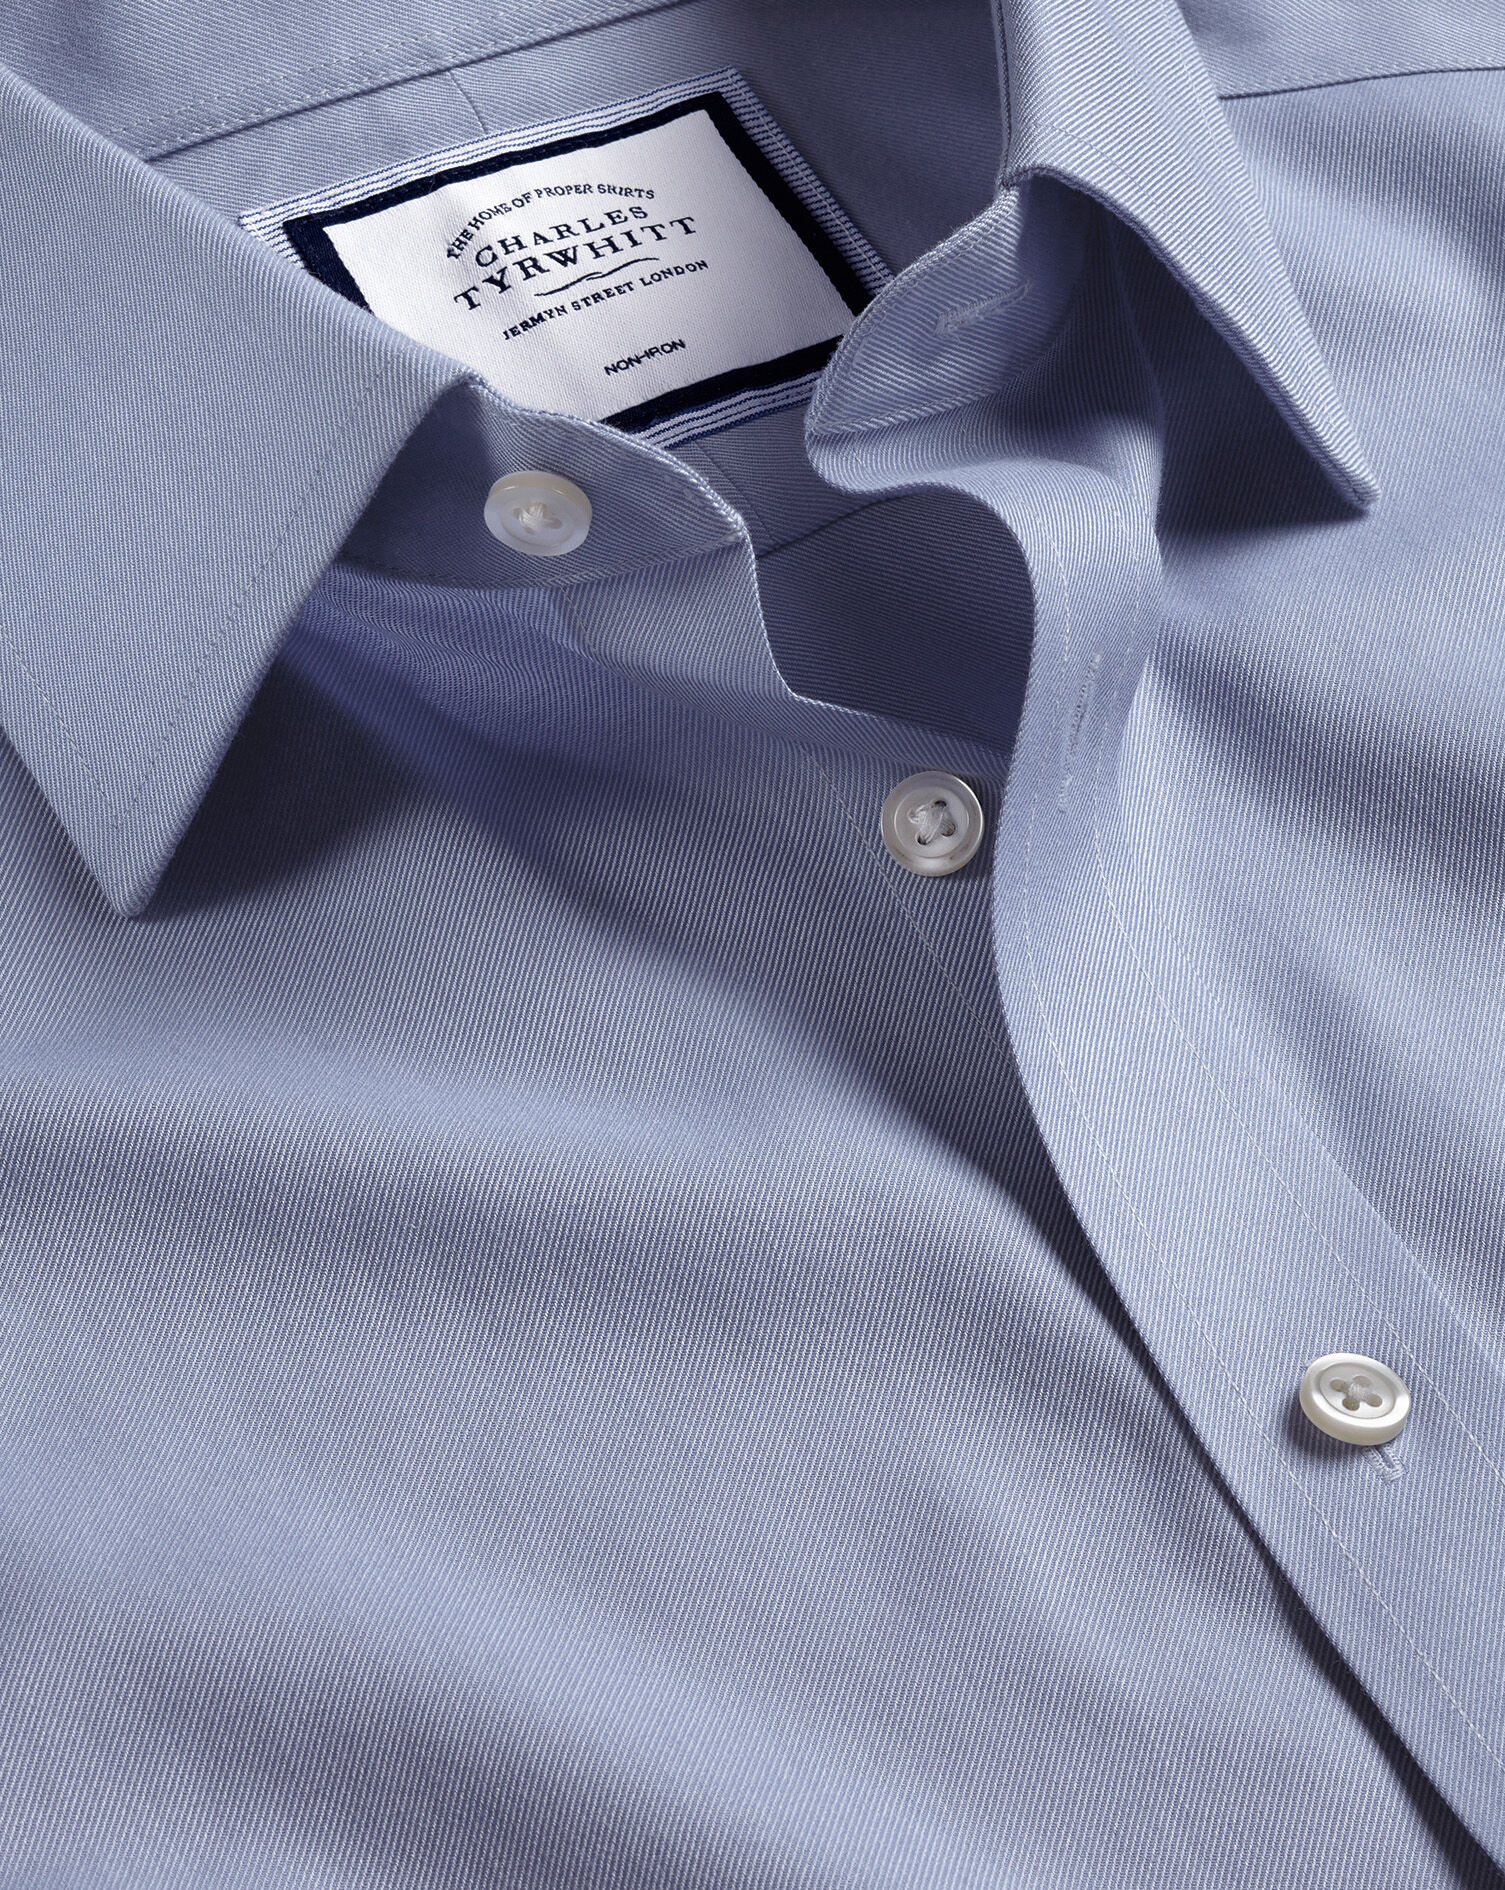 Charles Tyrwhitt Charles Tyrwhitt Blue Double-Cuff Work Shirt BN Slim Fit Size 16.5 